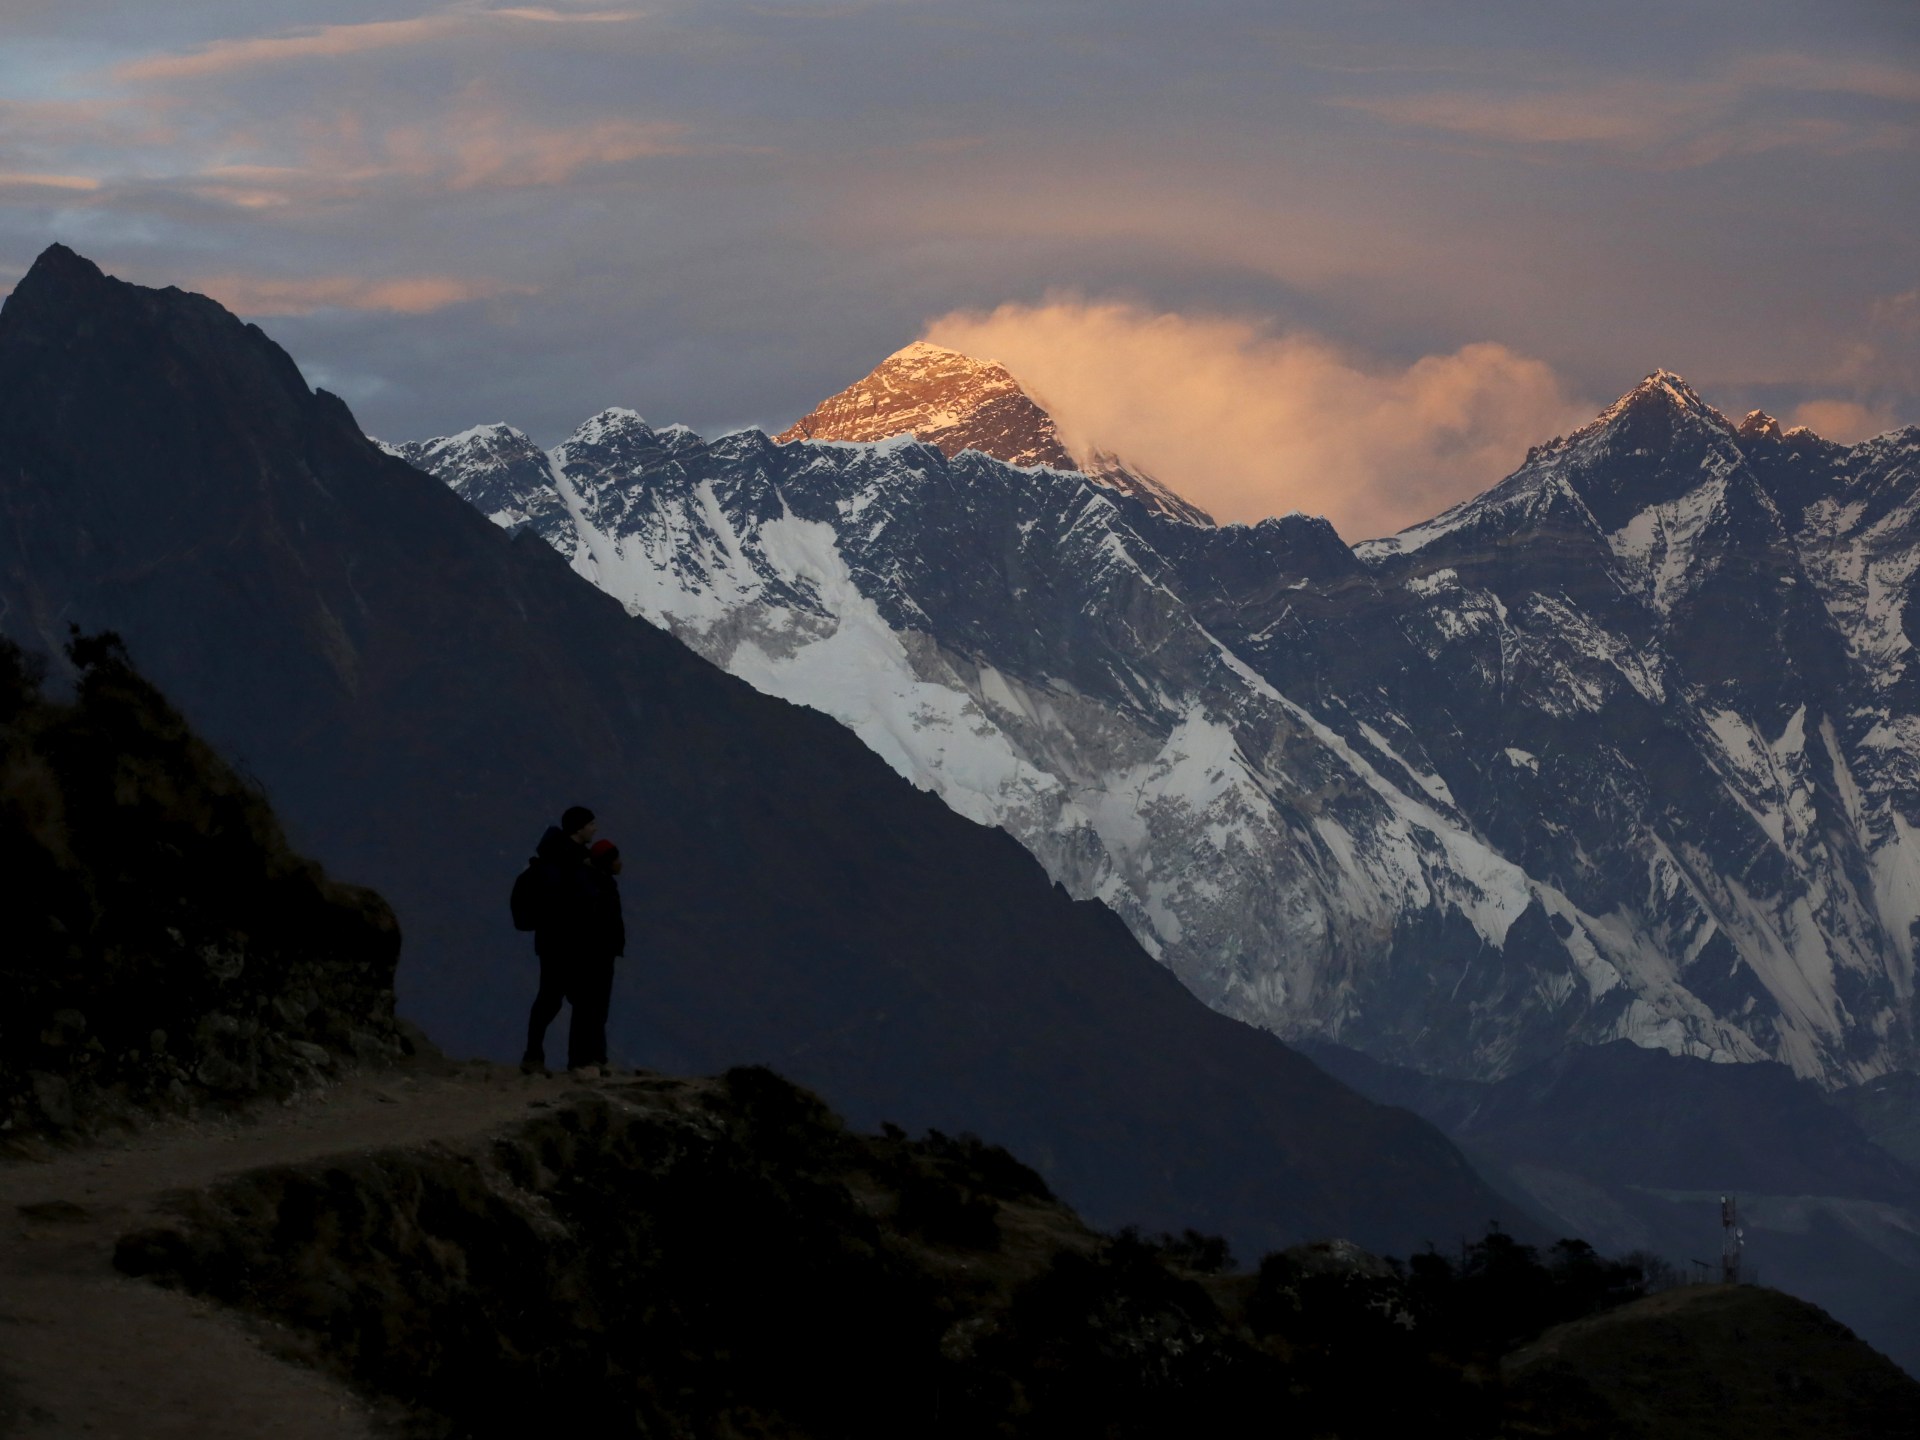 Lima tewas dalam kecelakaan helikopter turis di Nepal dekat Gunung Everest |  Berita Penerbangan